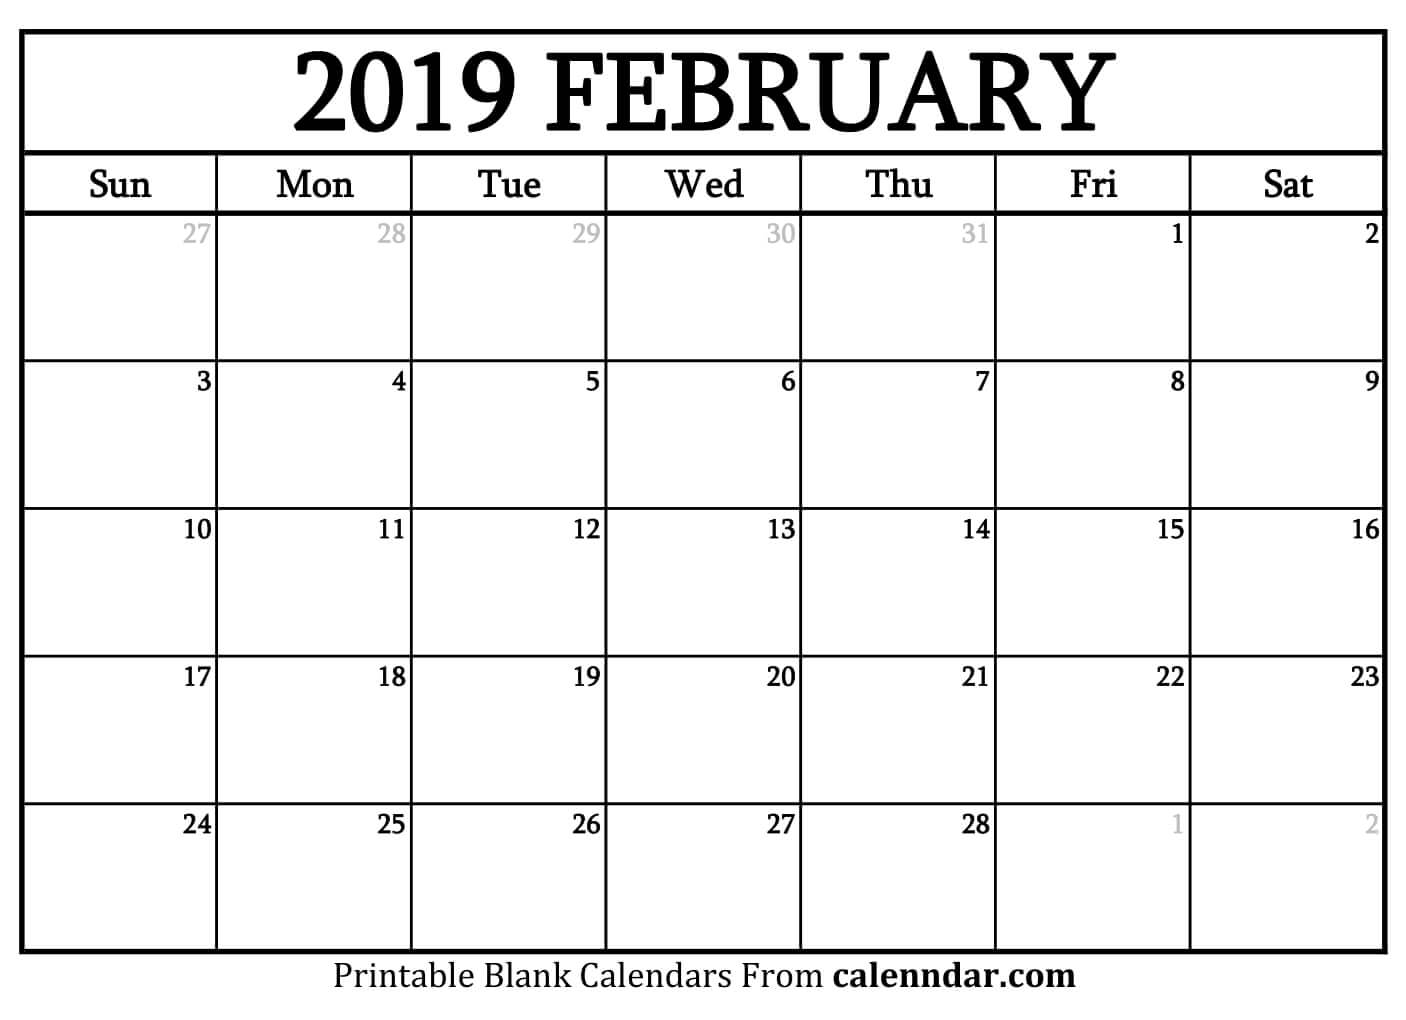 February 2019 Calendar Template